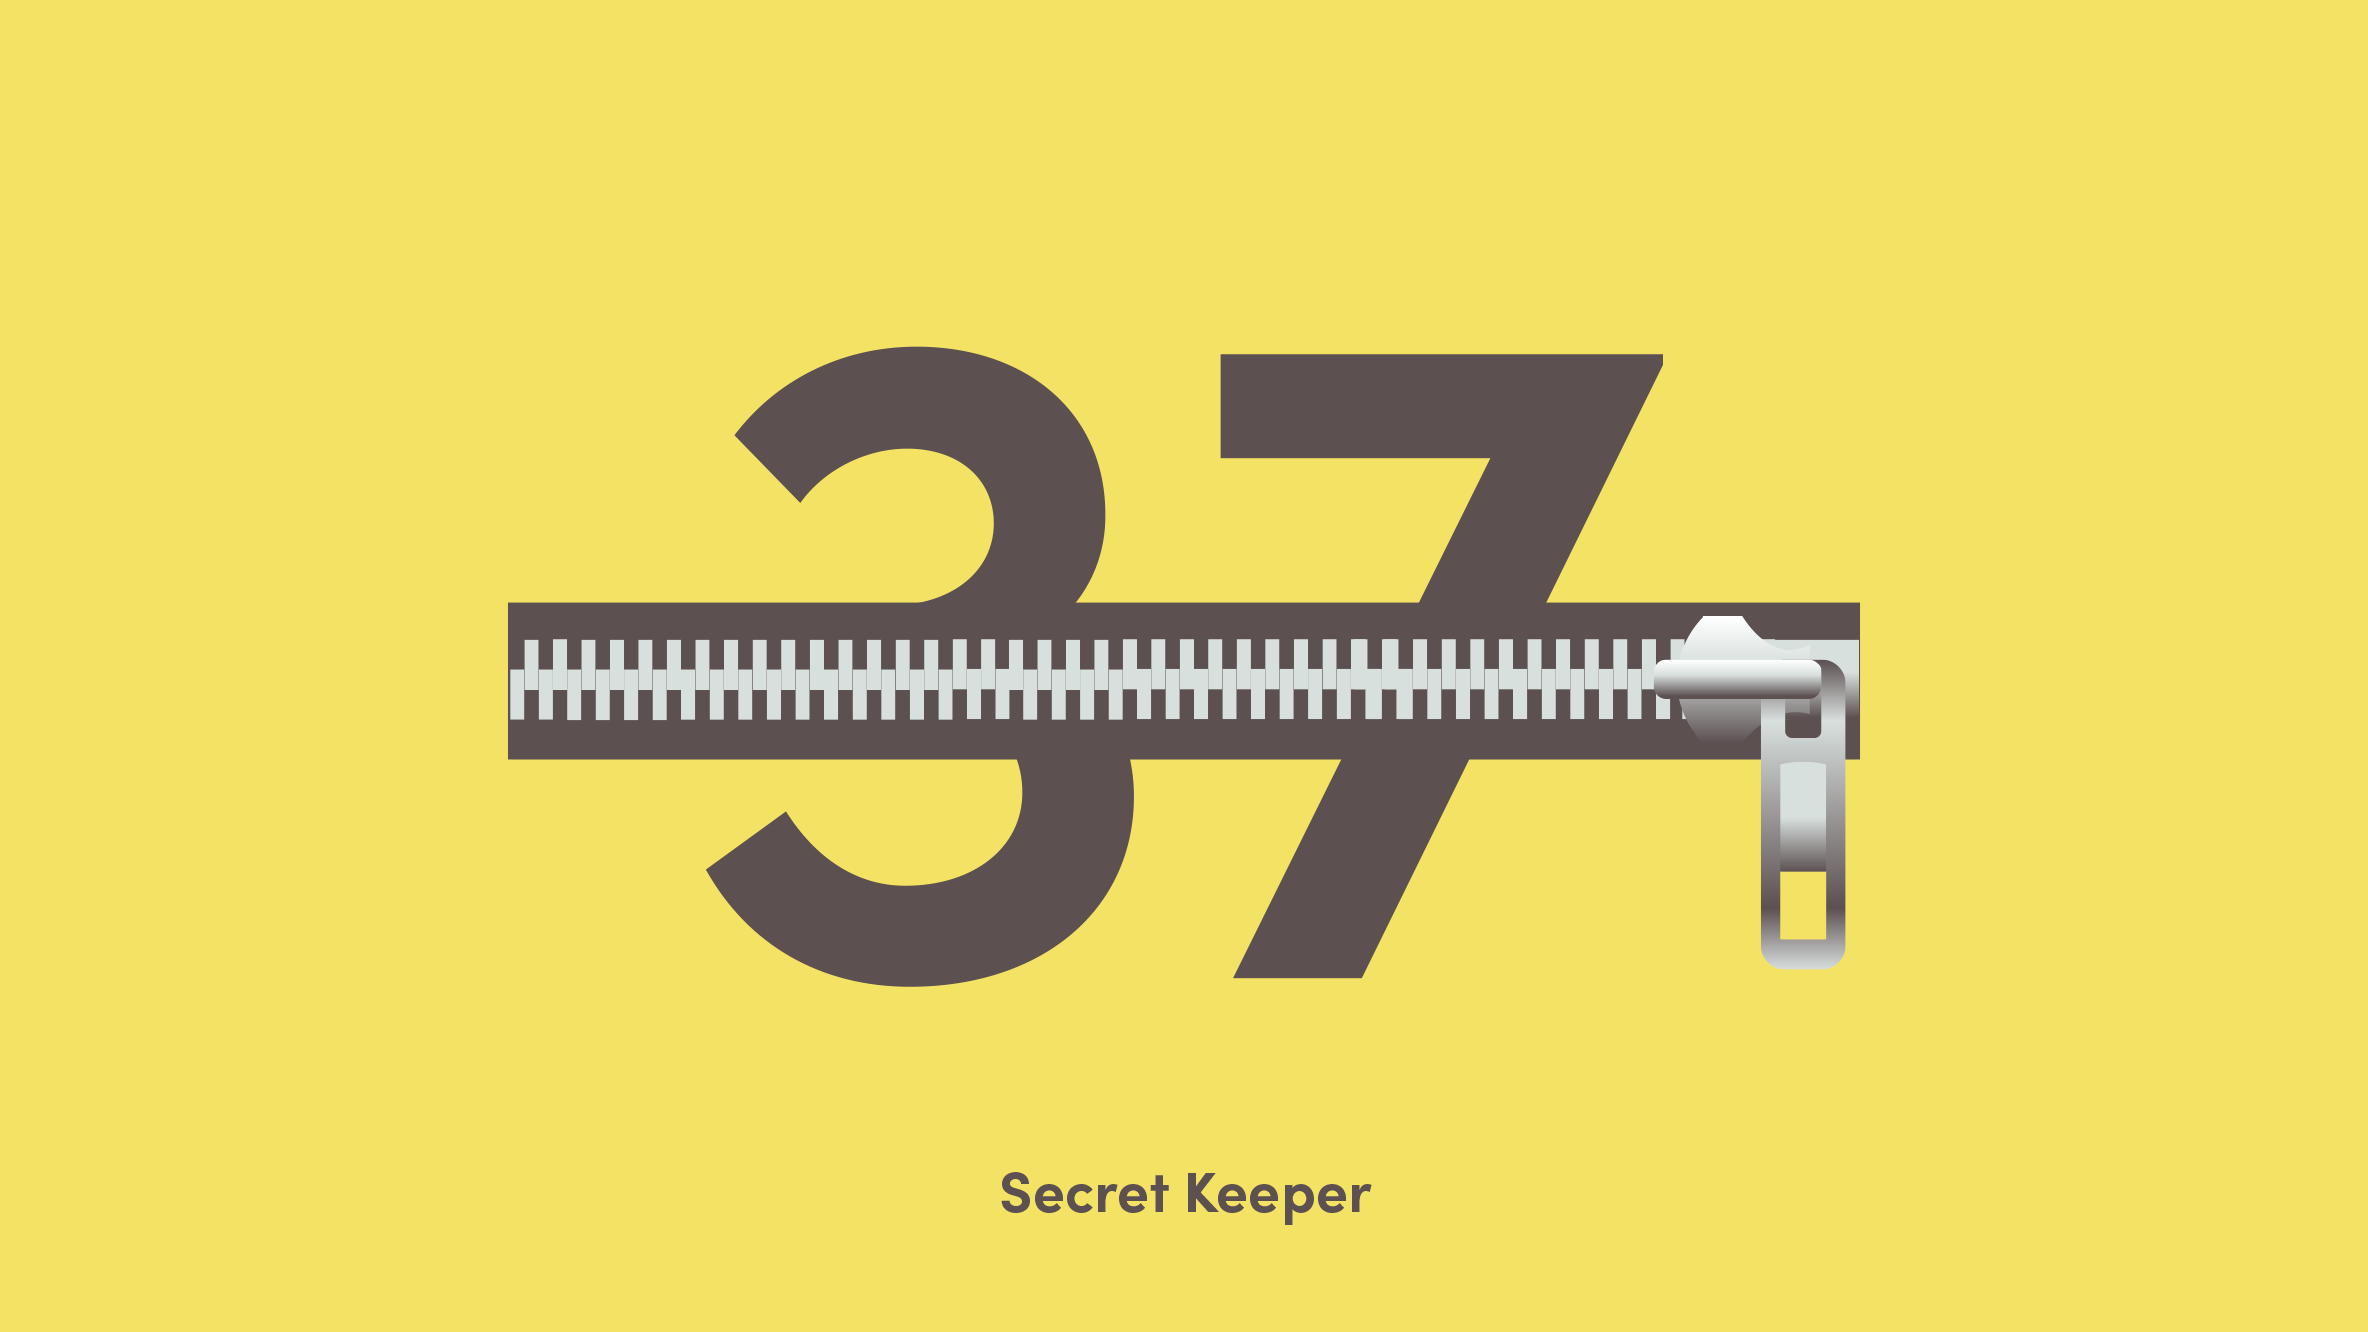 Act 37: Secret Keeper